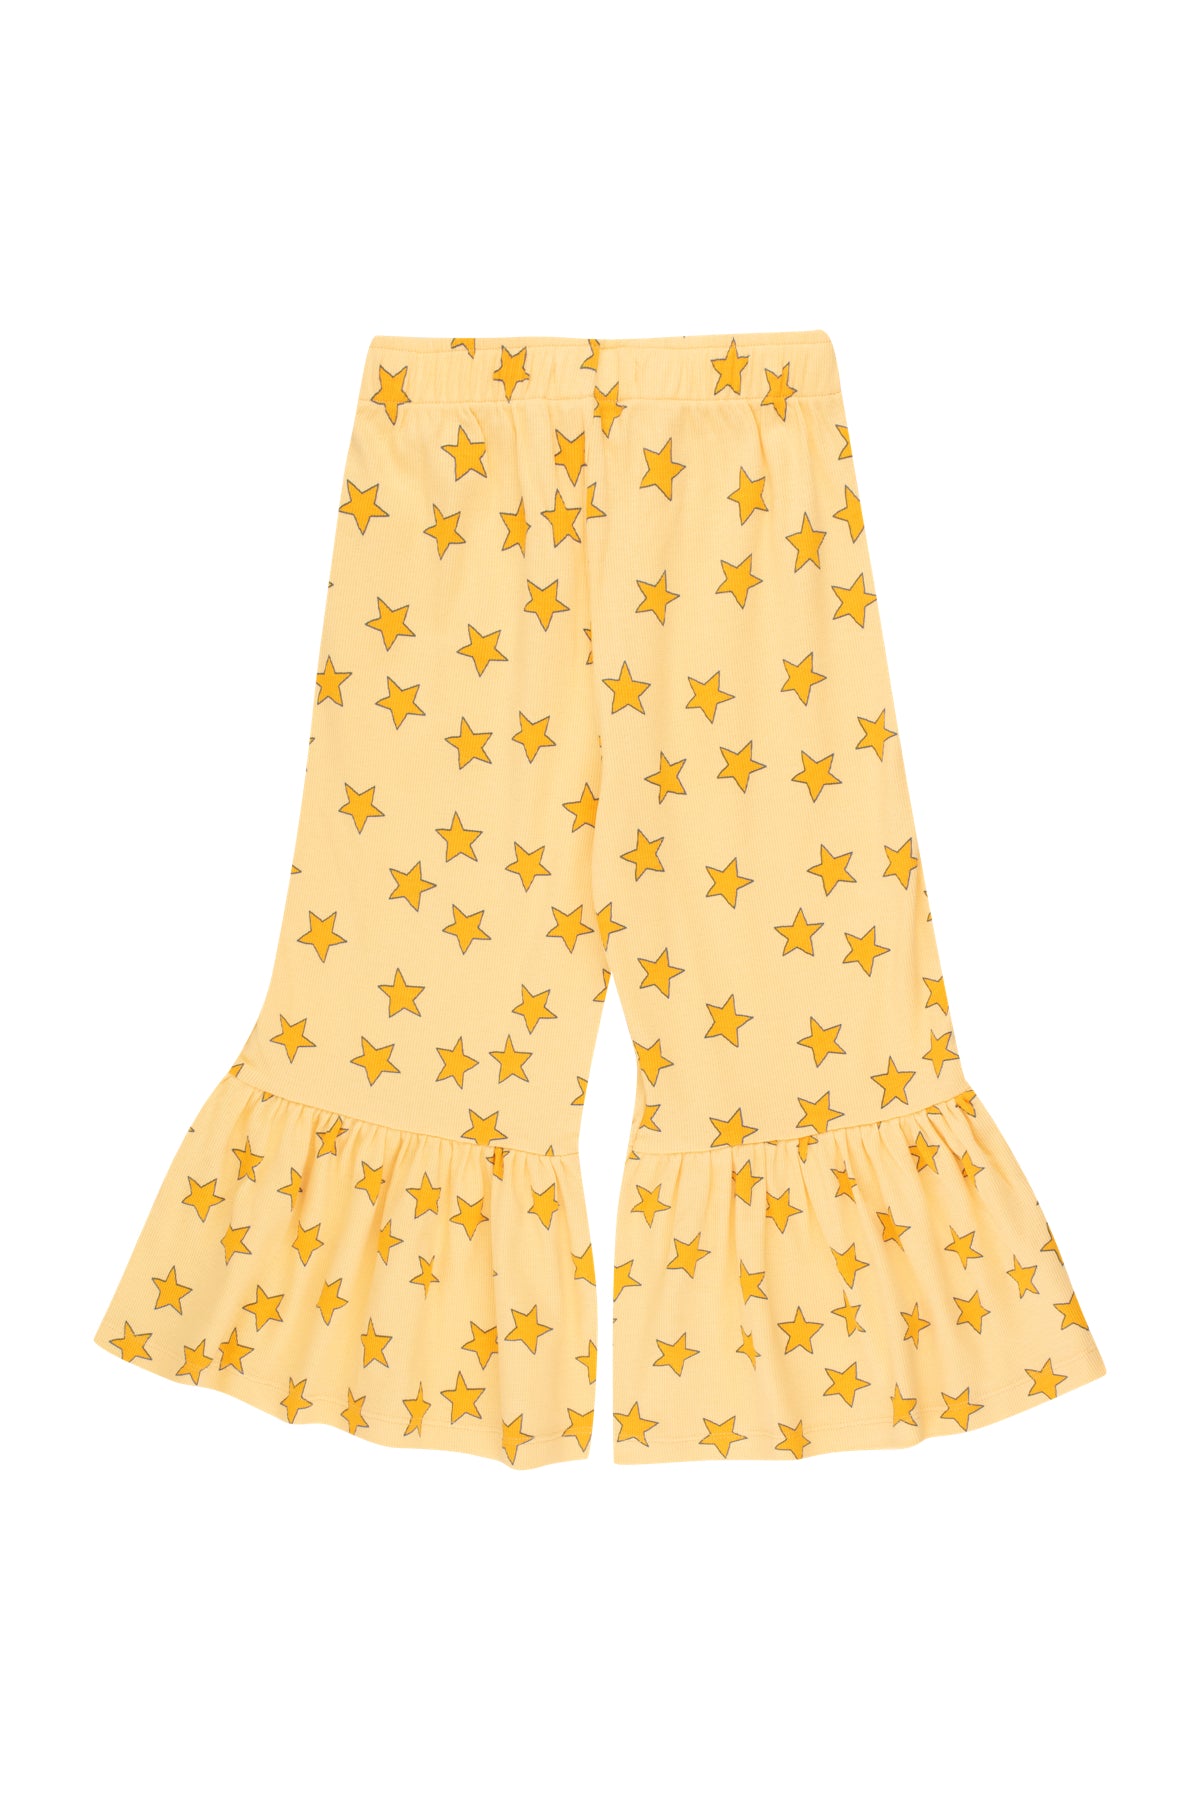 Stars Hose - yellow mellow